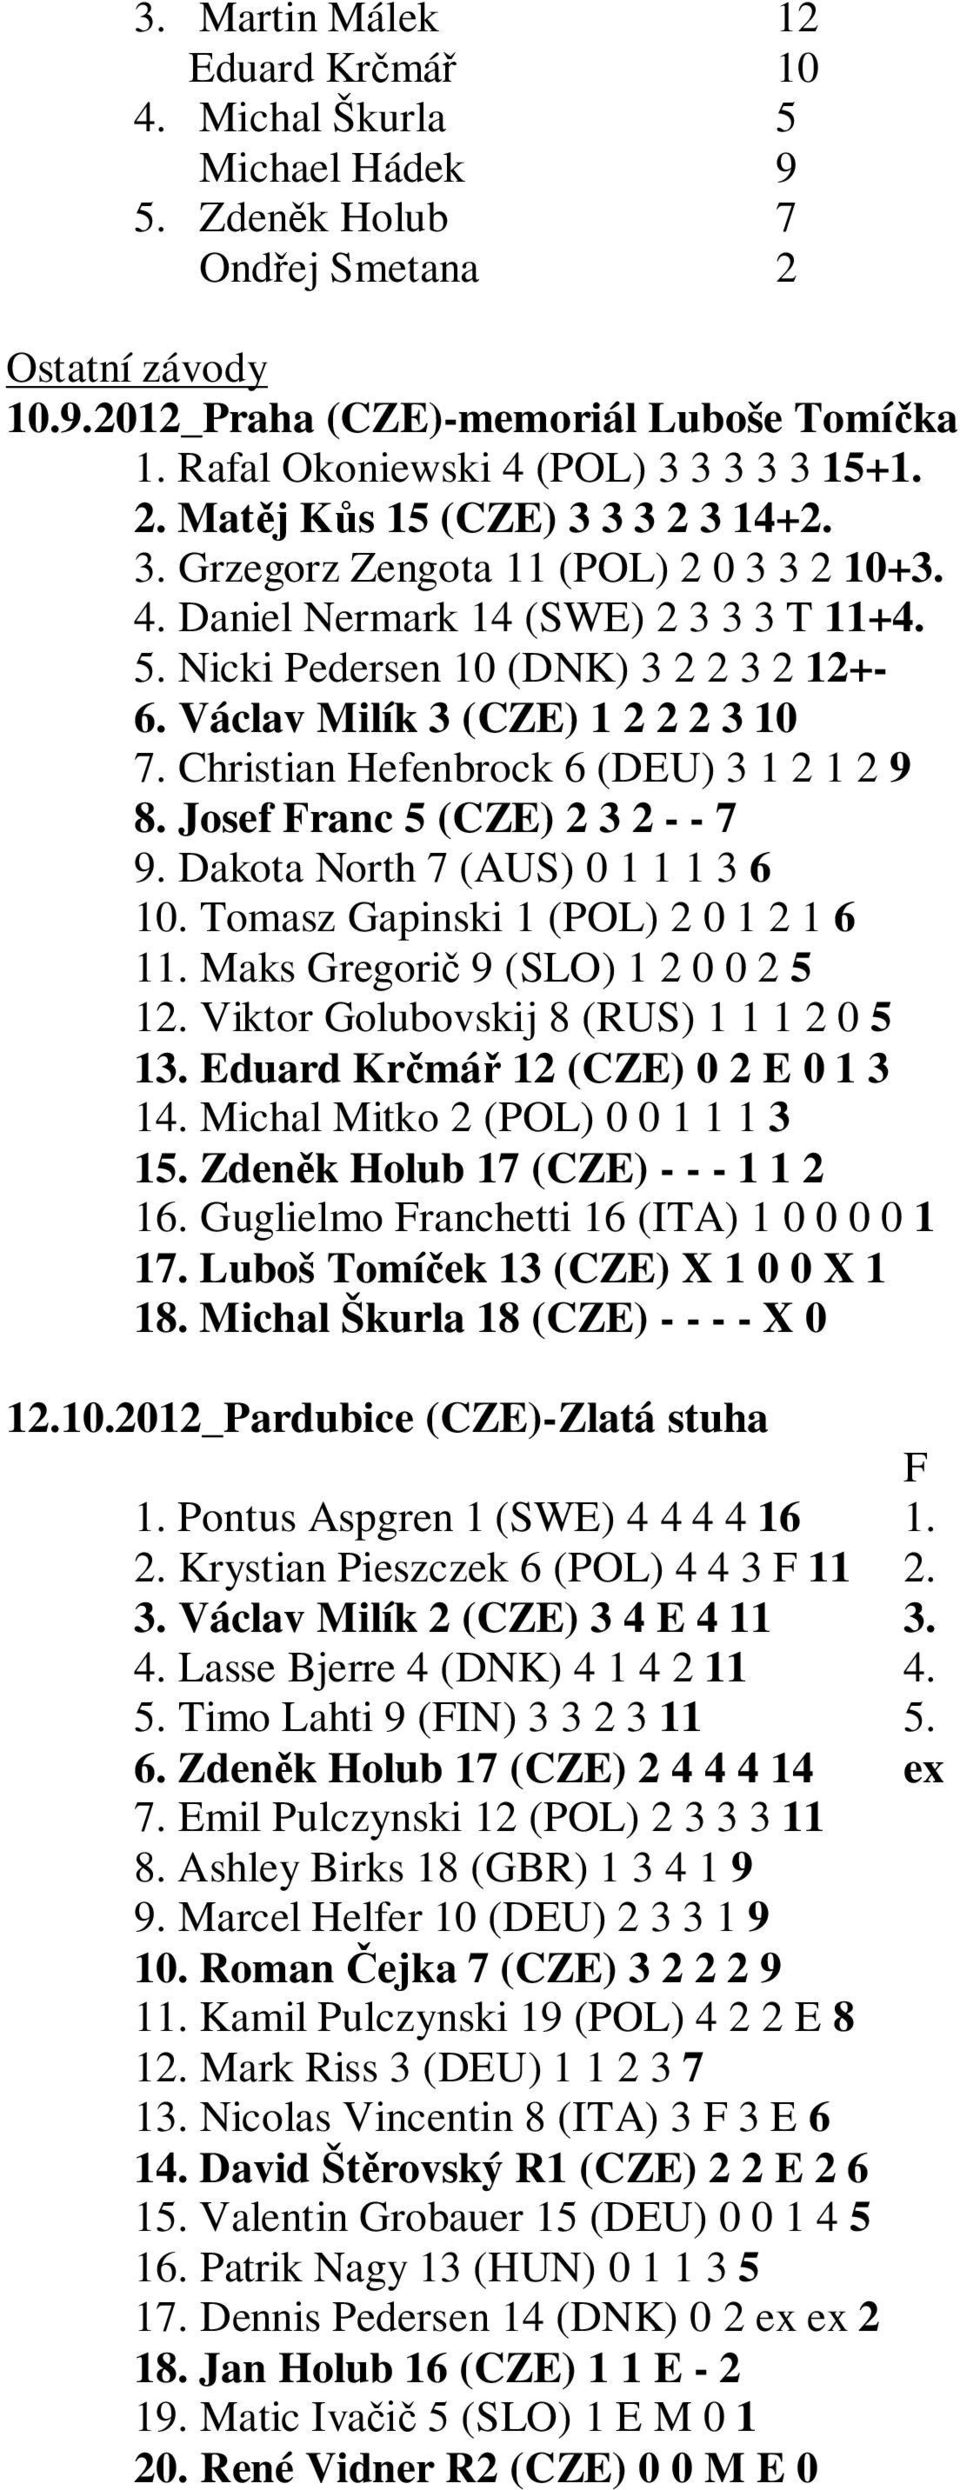 Nicki Pedersen 10 (DNK) 3 2 2 3 2 12+- 6. Václav Milík 3 (CZE) 1 2 2 2 3 10 7. Christian Hefenbrock 6 (DEU) 3 1 2 1 2 9 8. Josef Franc 5 (CZE) 2 3 2 - - 7 9. Dakota North 7 (AUS) 0 1 1 1 3 6 10.